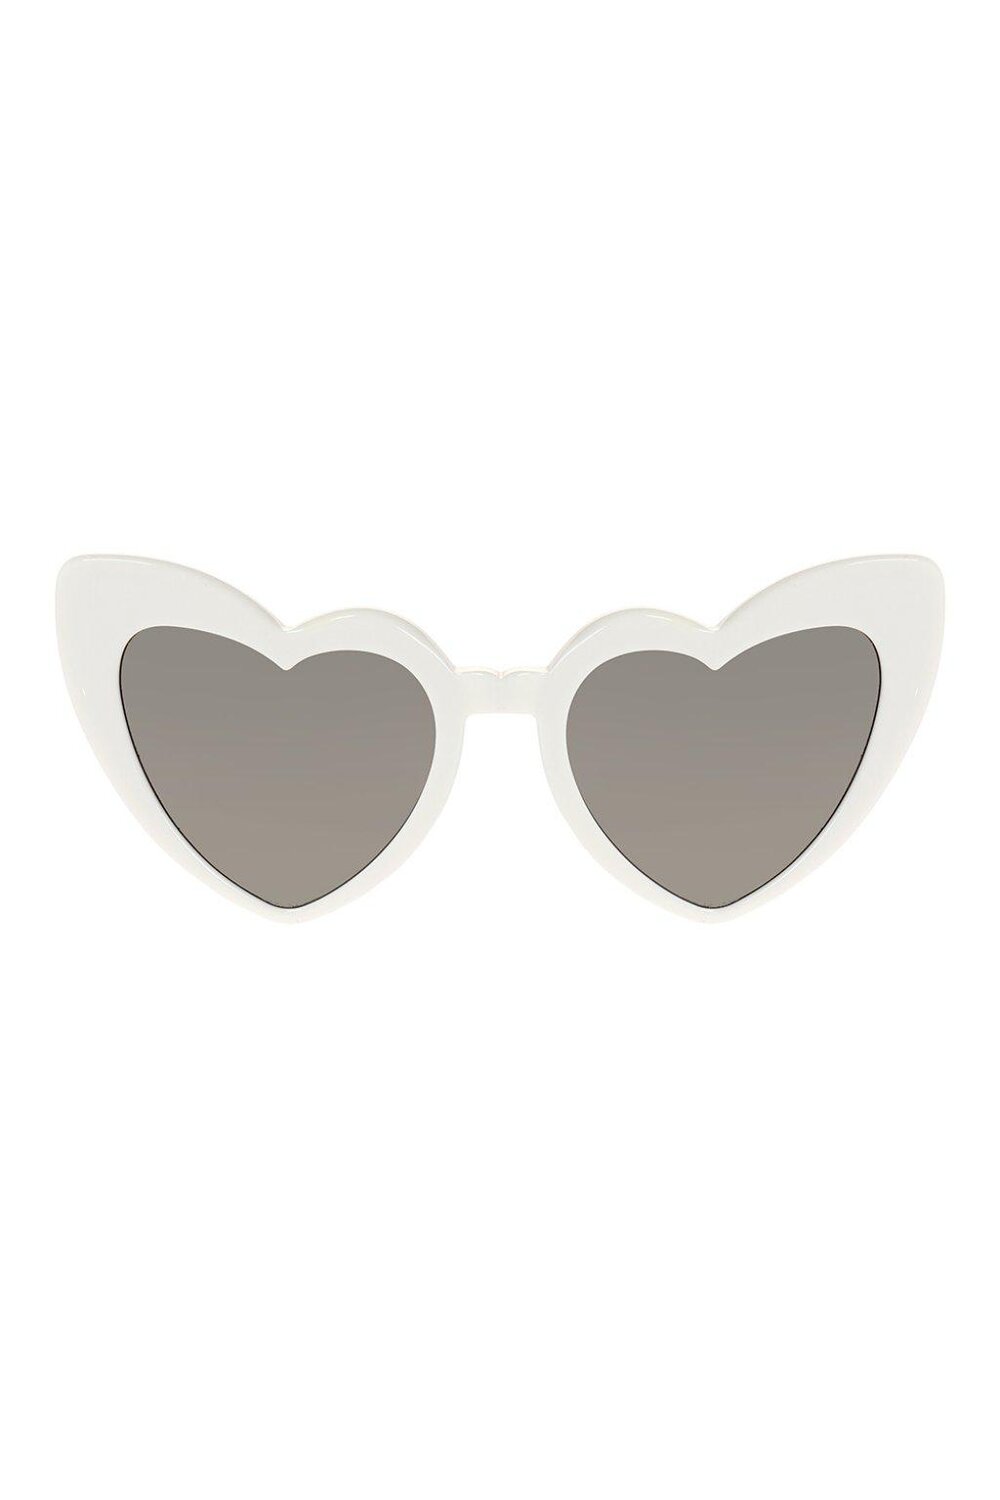 saint laurent sunglasses white